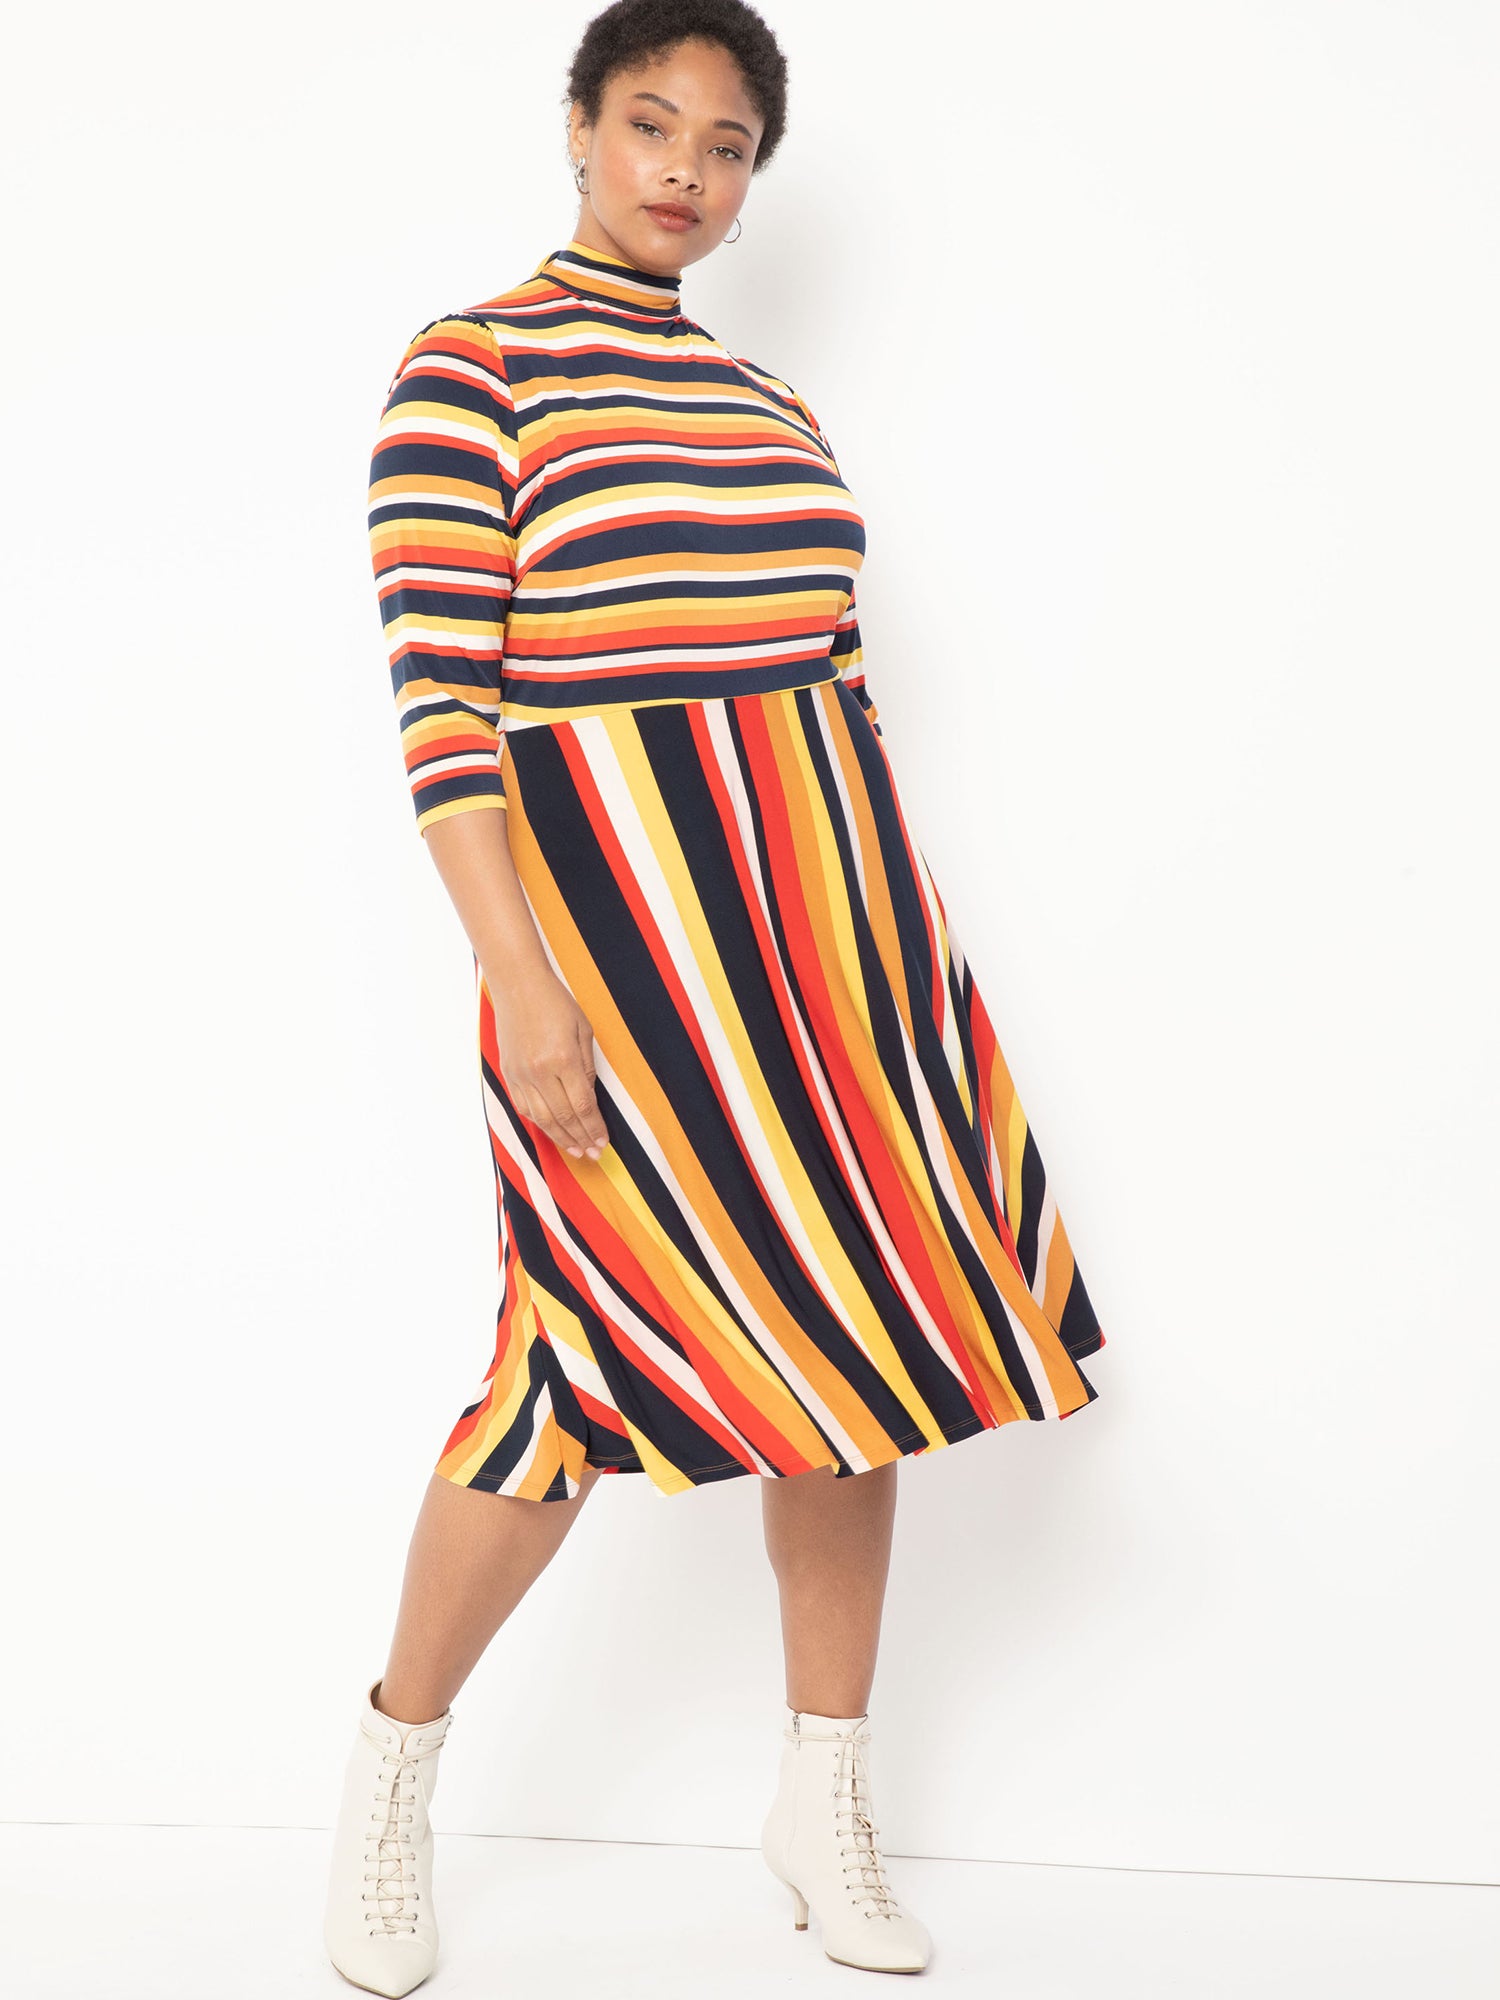 Eloquii Plus Size Stripe Fit and Flare Dress.jpeg